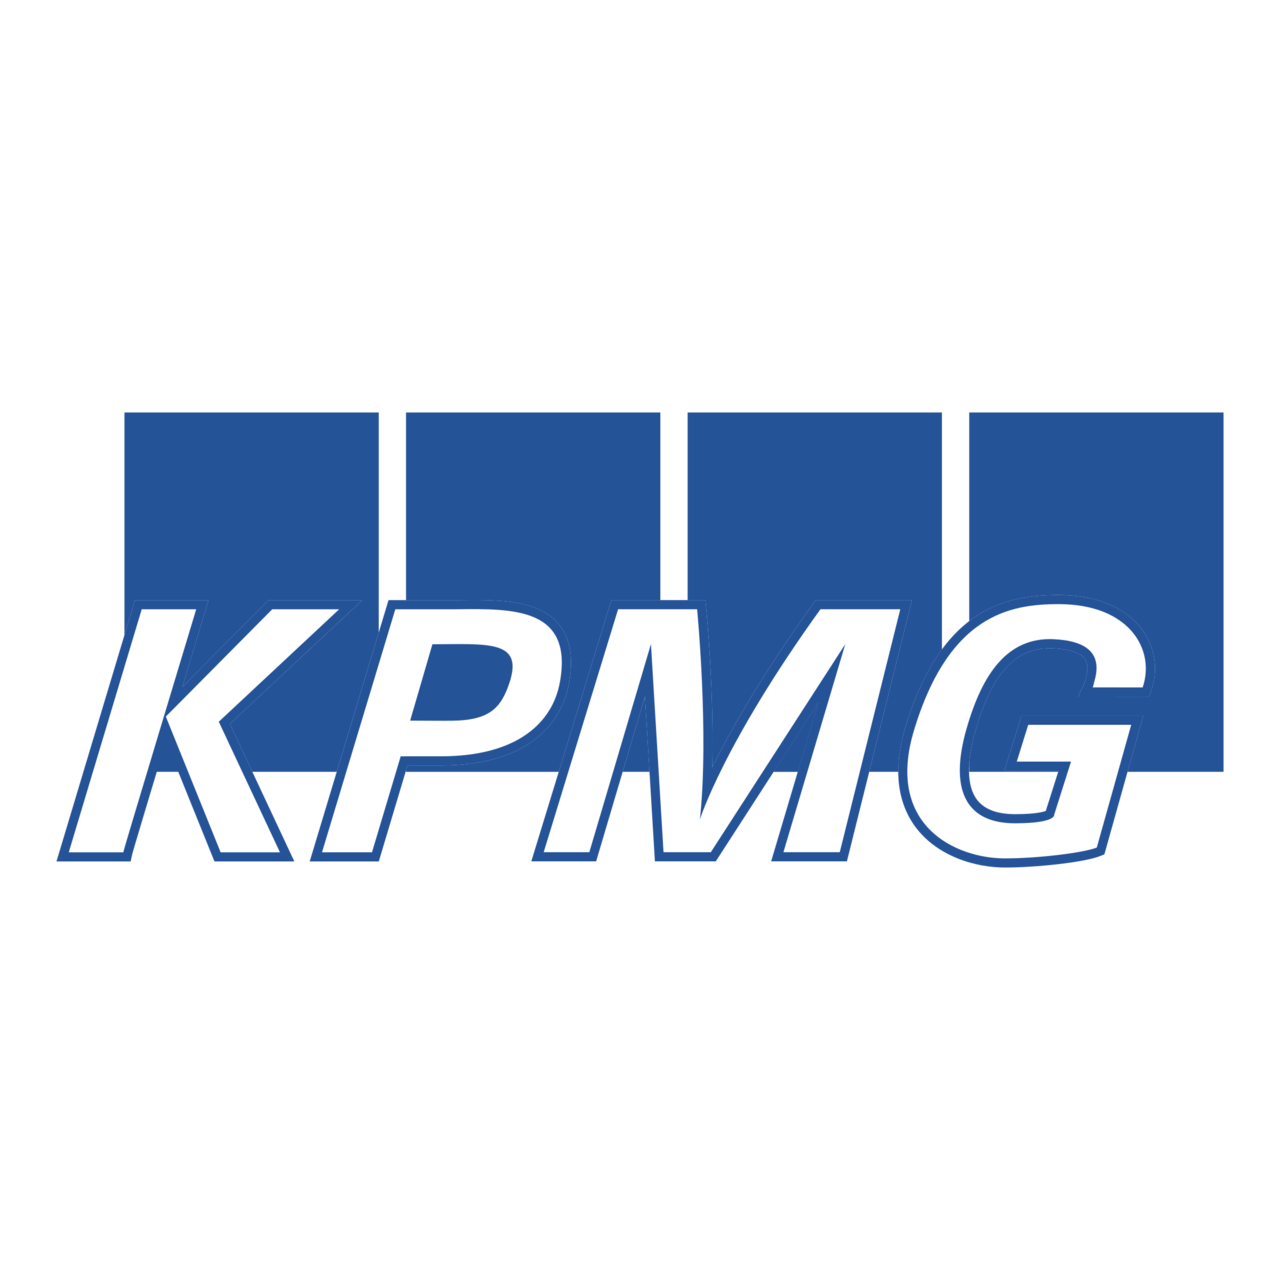 KPMG GRADUATE RECRUITMENT 2022